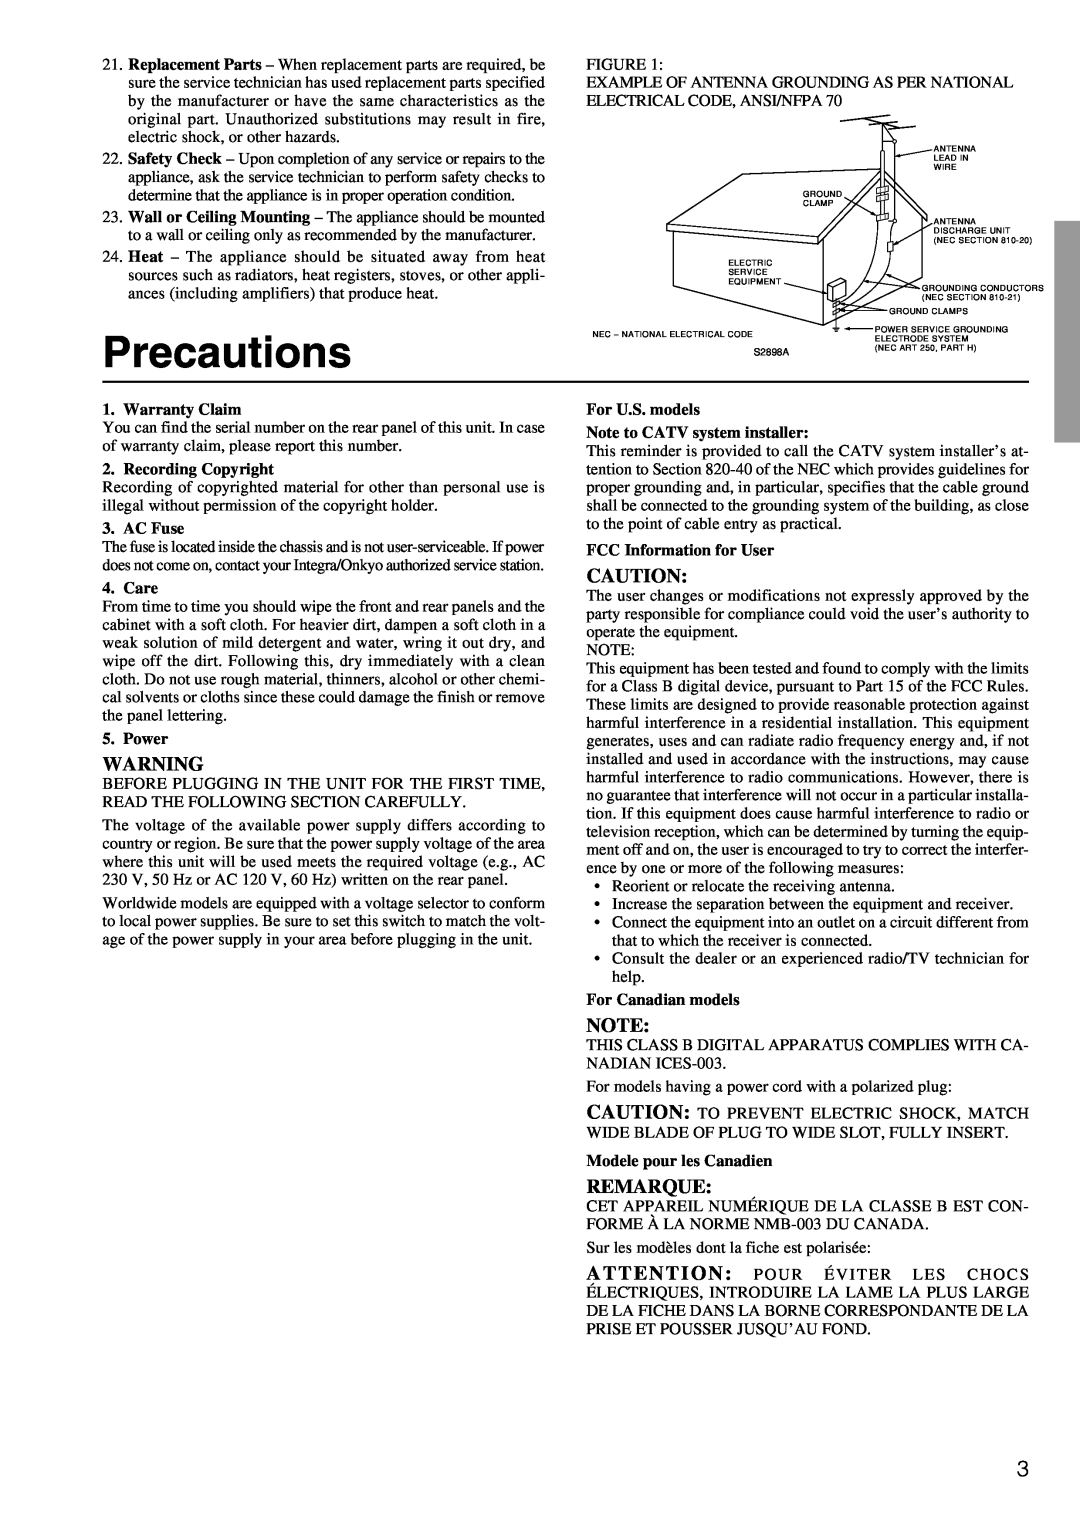 Integra DTR-6.2 instruction manual Precautions, Remarque 